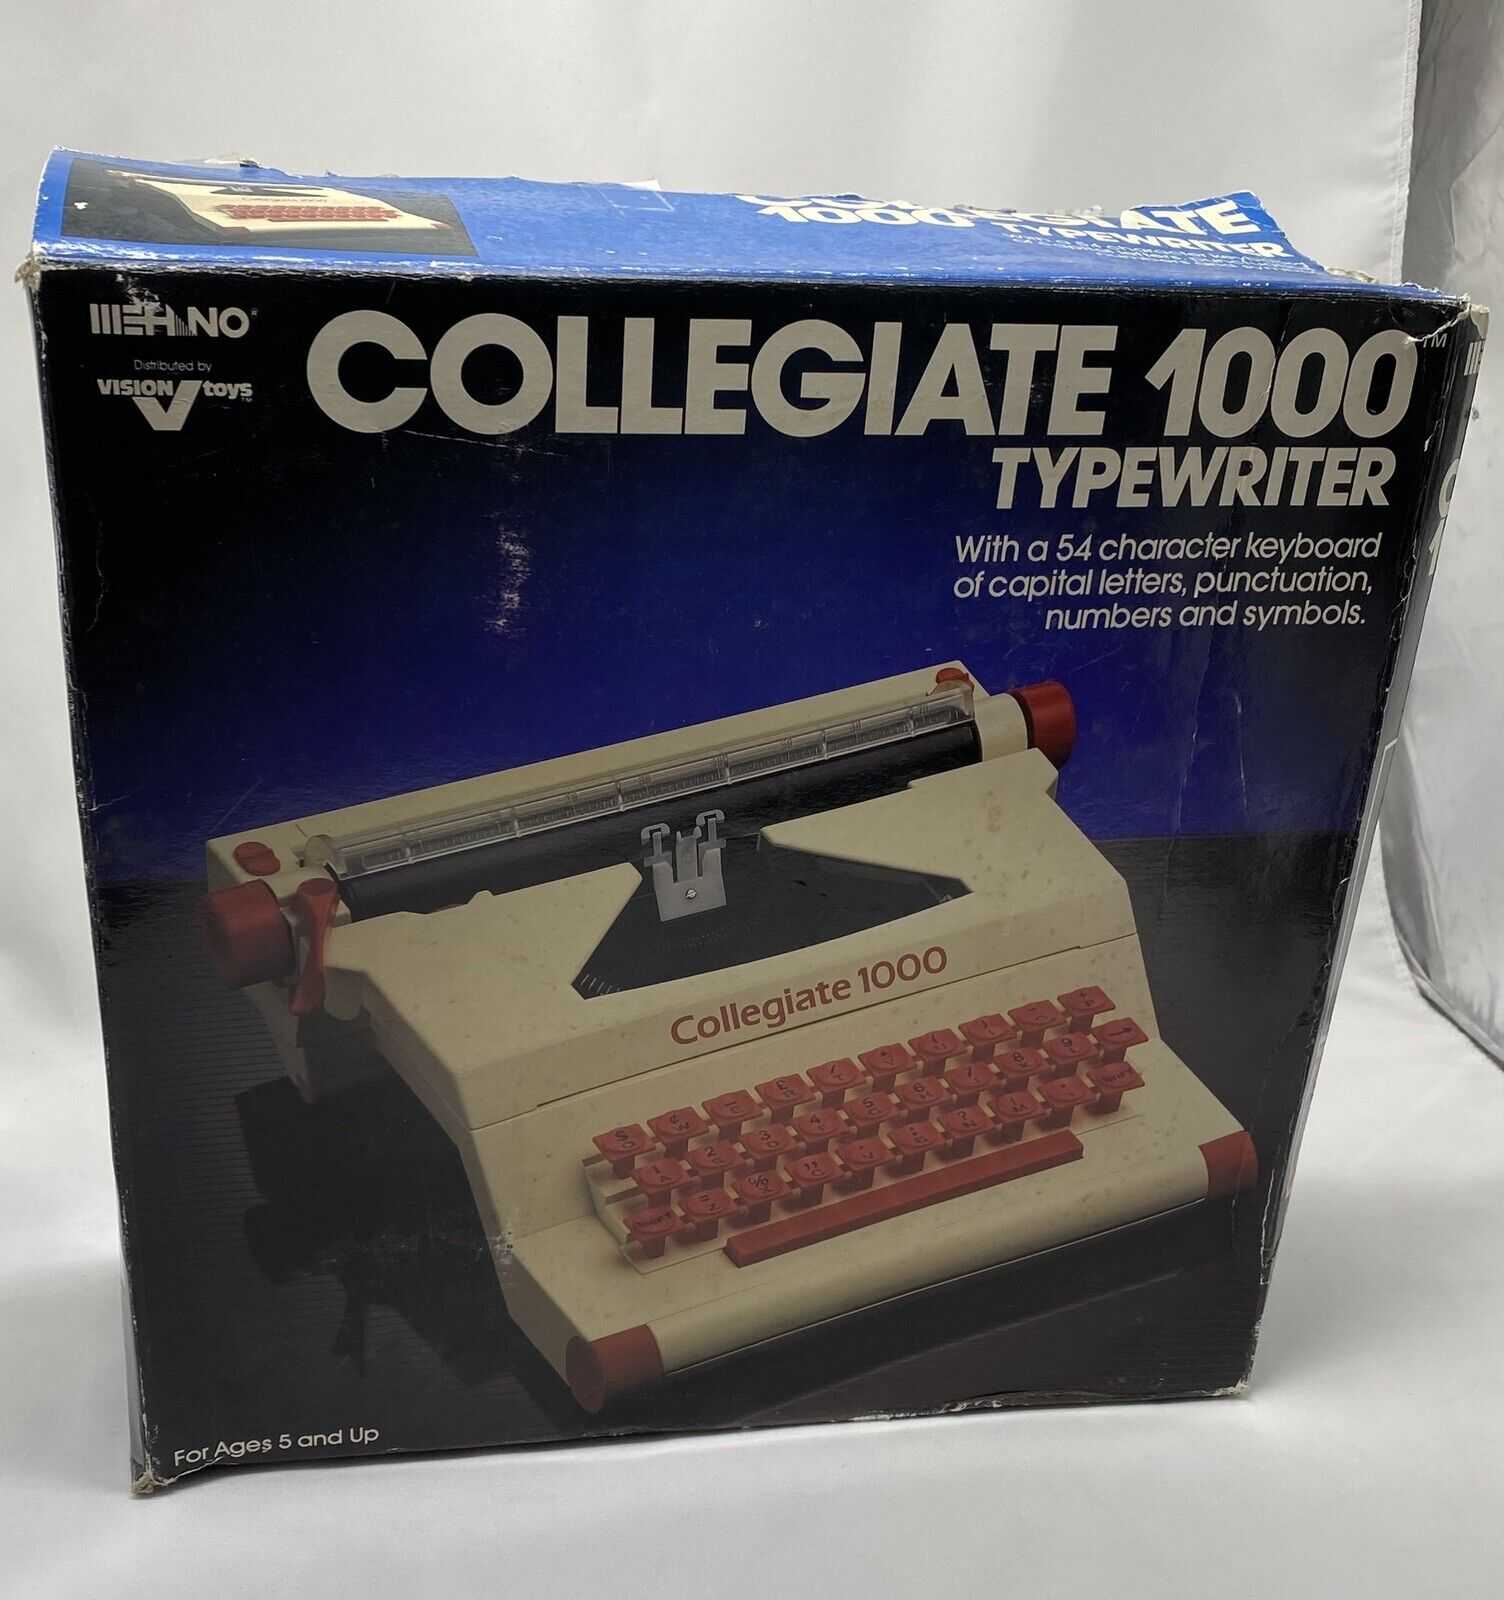  Vintage COLLEGIATE 1000 TYPEWRITER by Mehno Vision Toys (#1023)